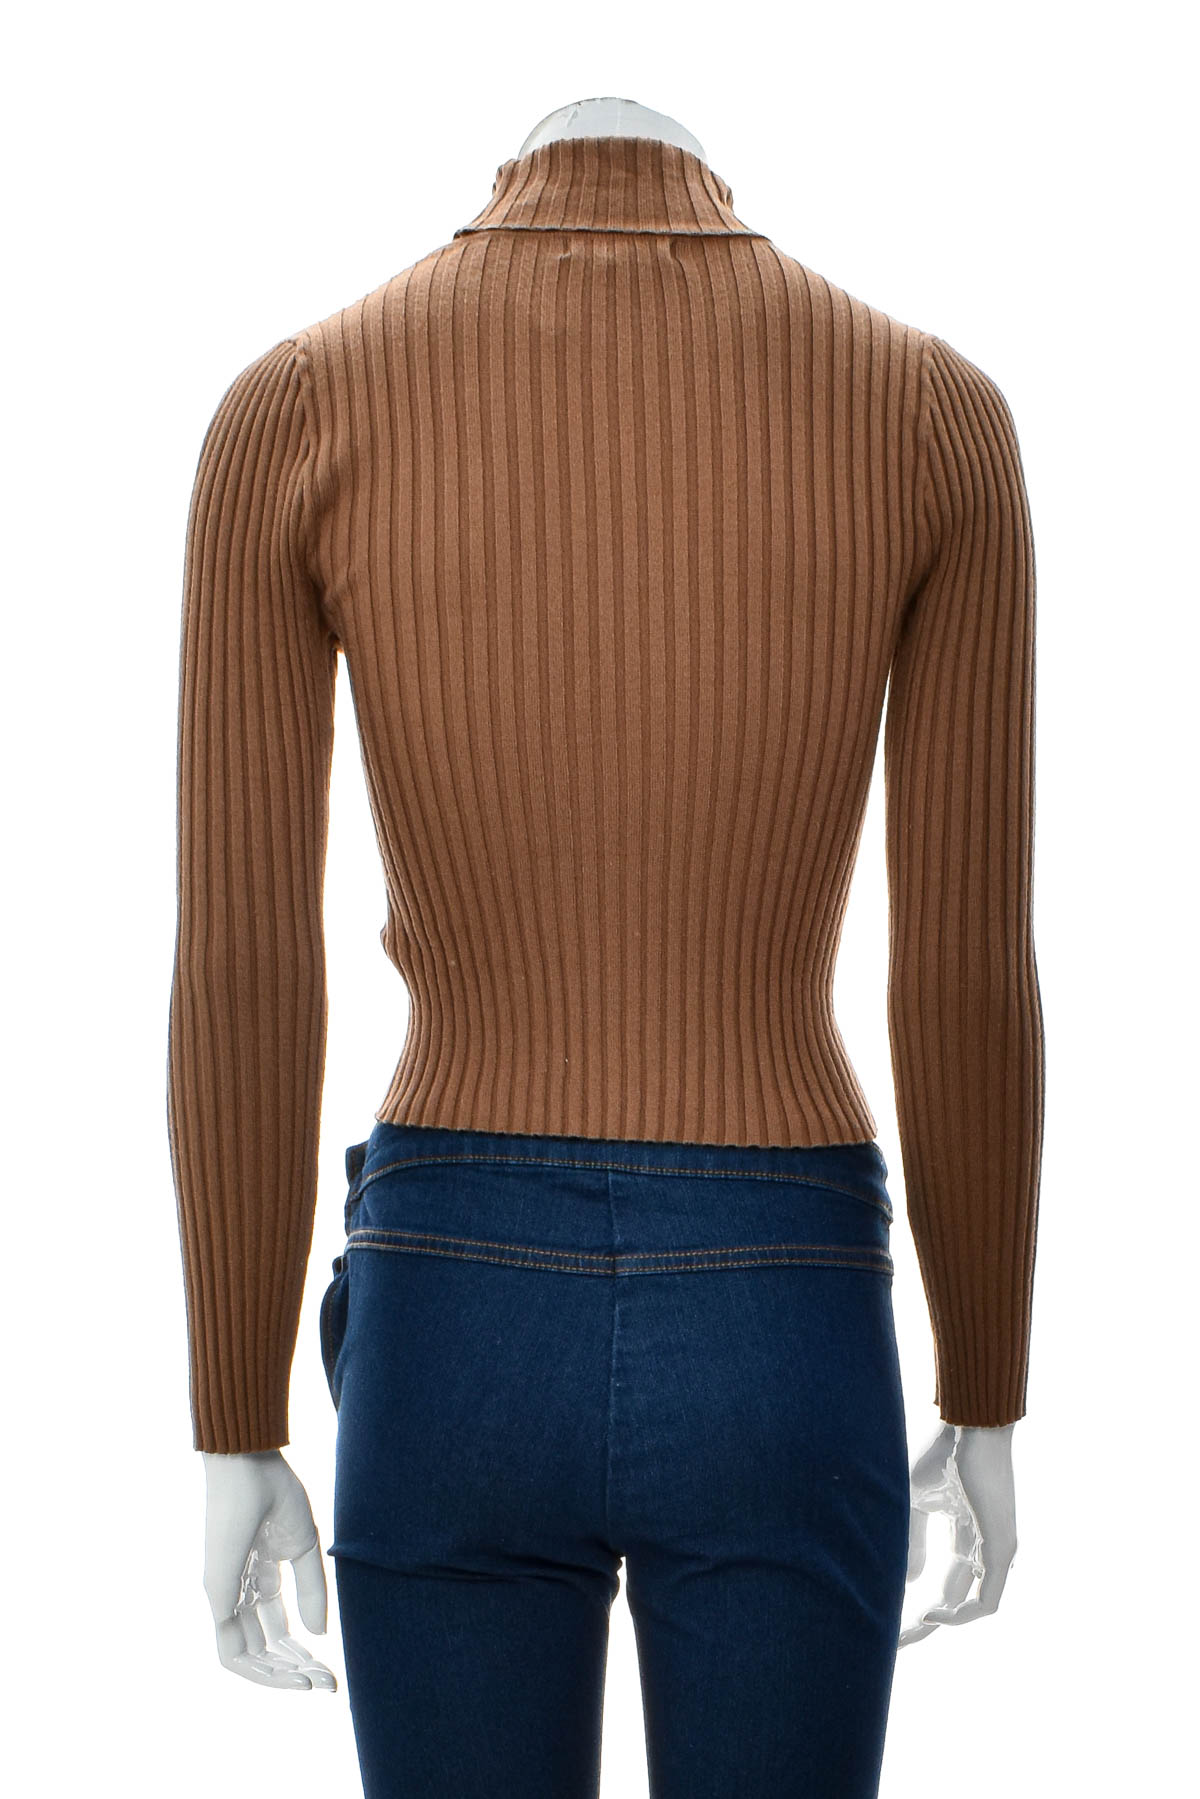 Women's sweater - Asos - 1